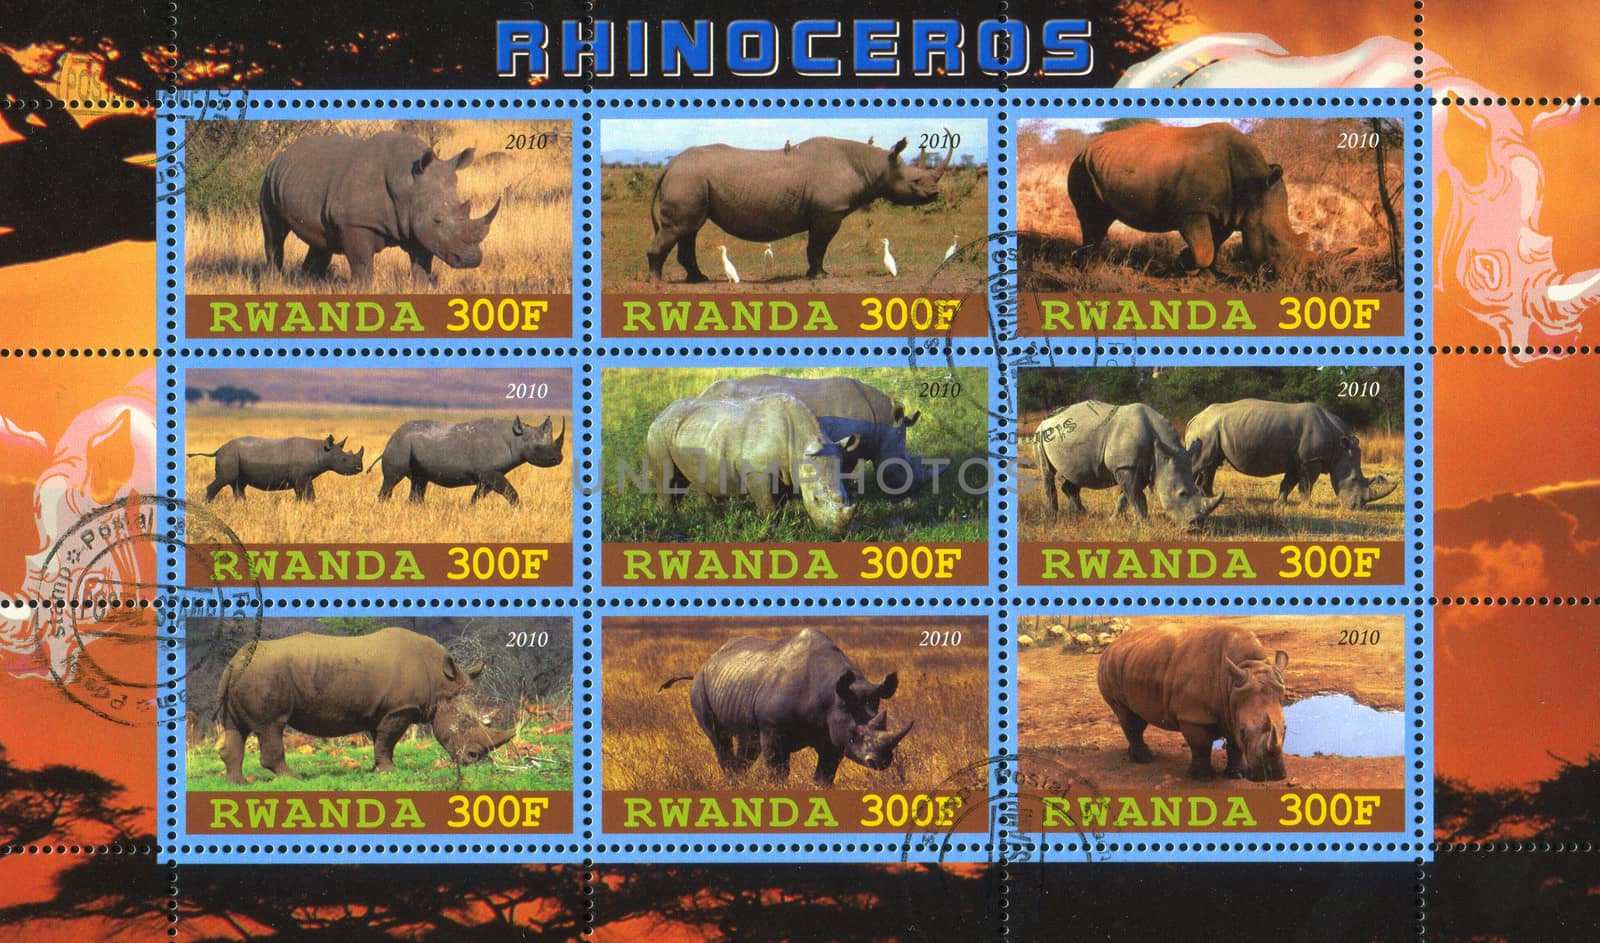 RWANDA - CIRCA 2010: stamp printed by Rwanda, shows Rhinoceros, circa 2010